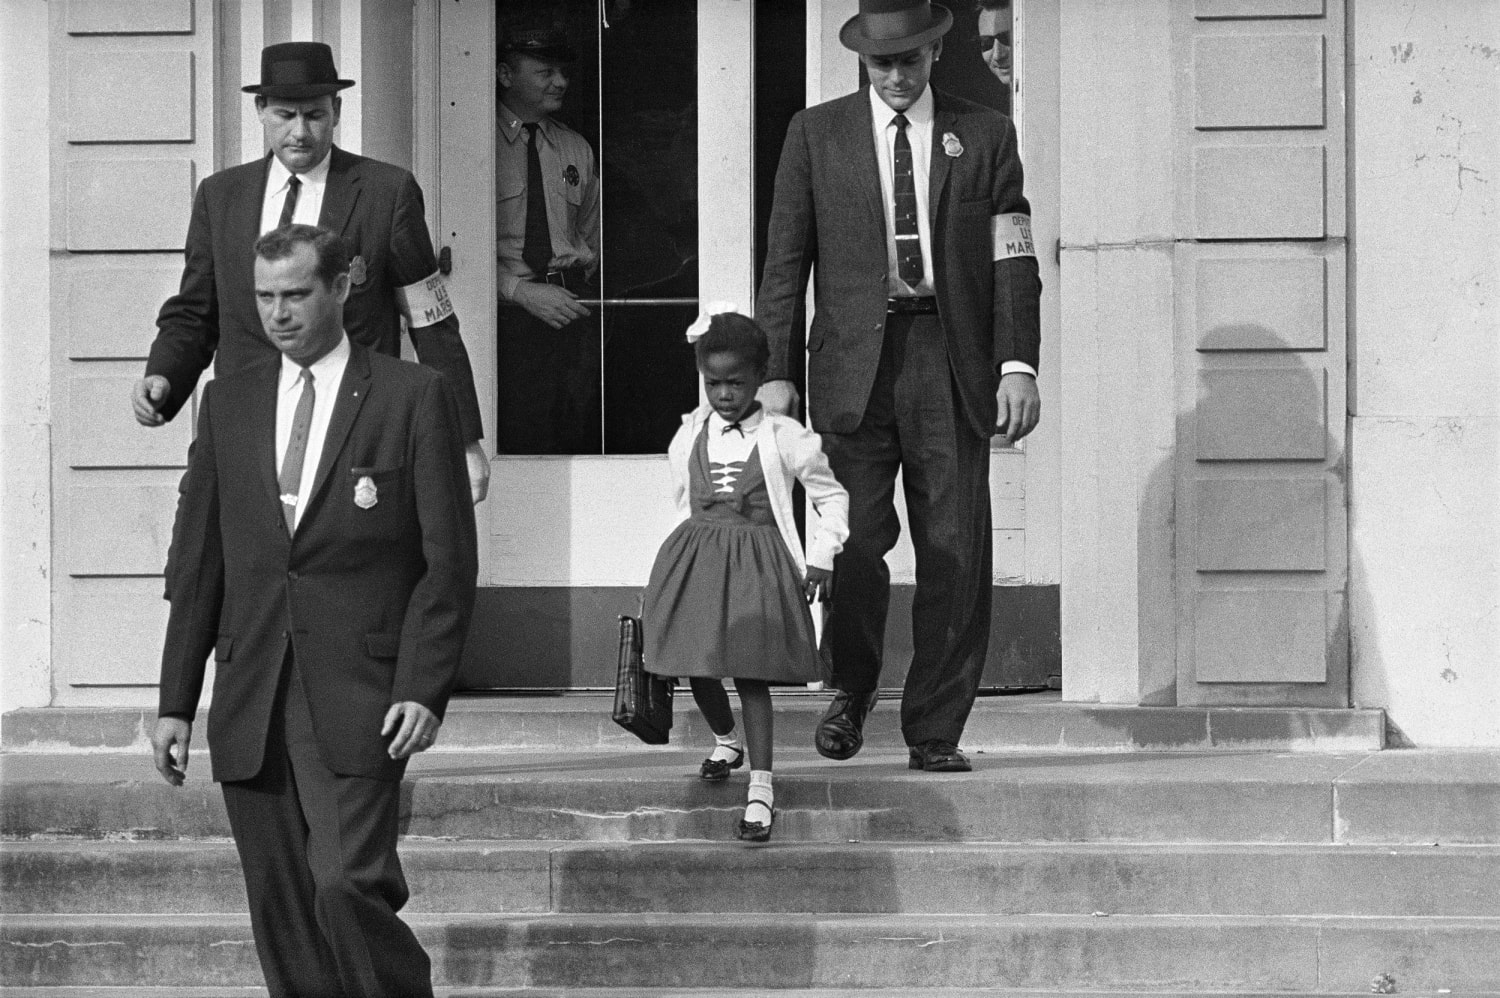 Florida elementary school temporarily bars 'Ruby Bridges' film following parent’s complaint